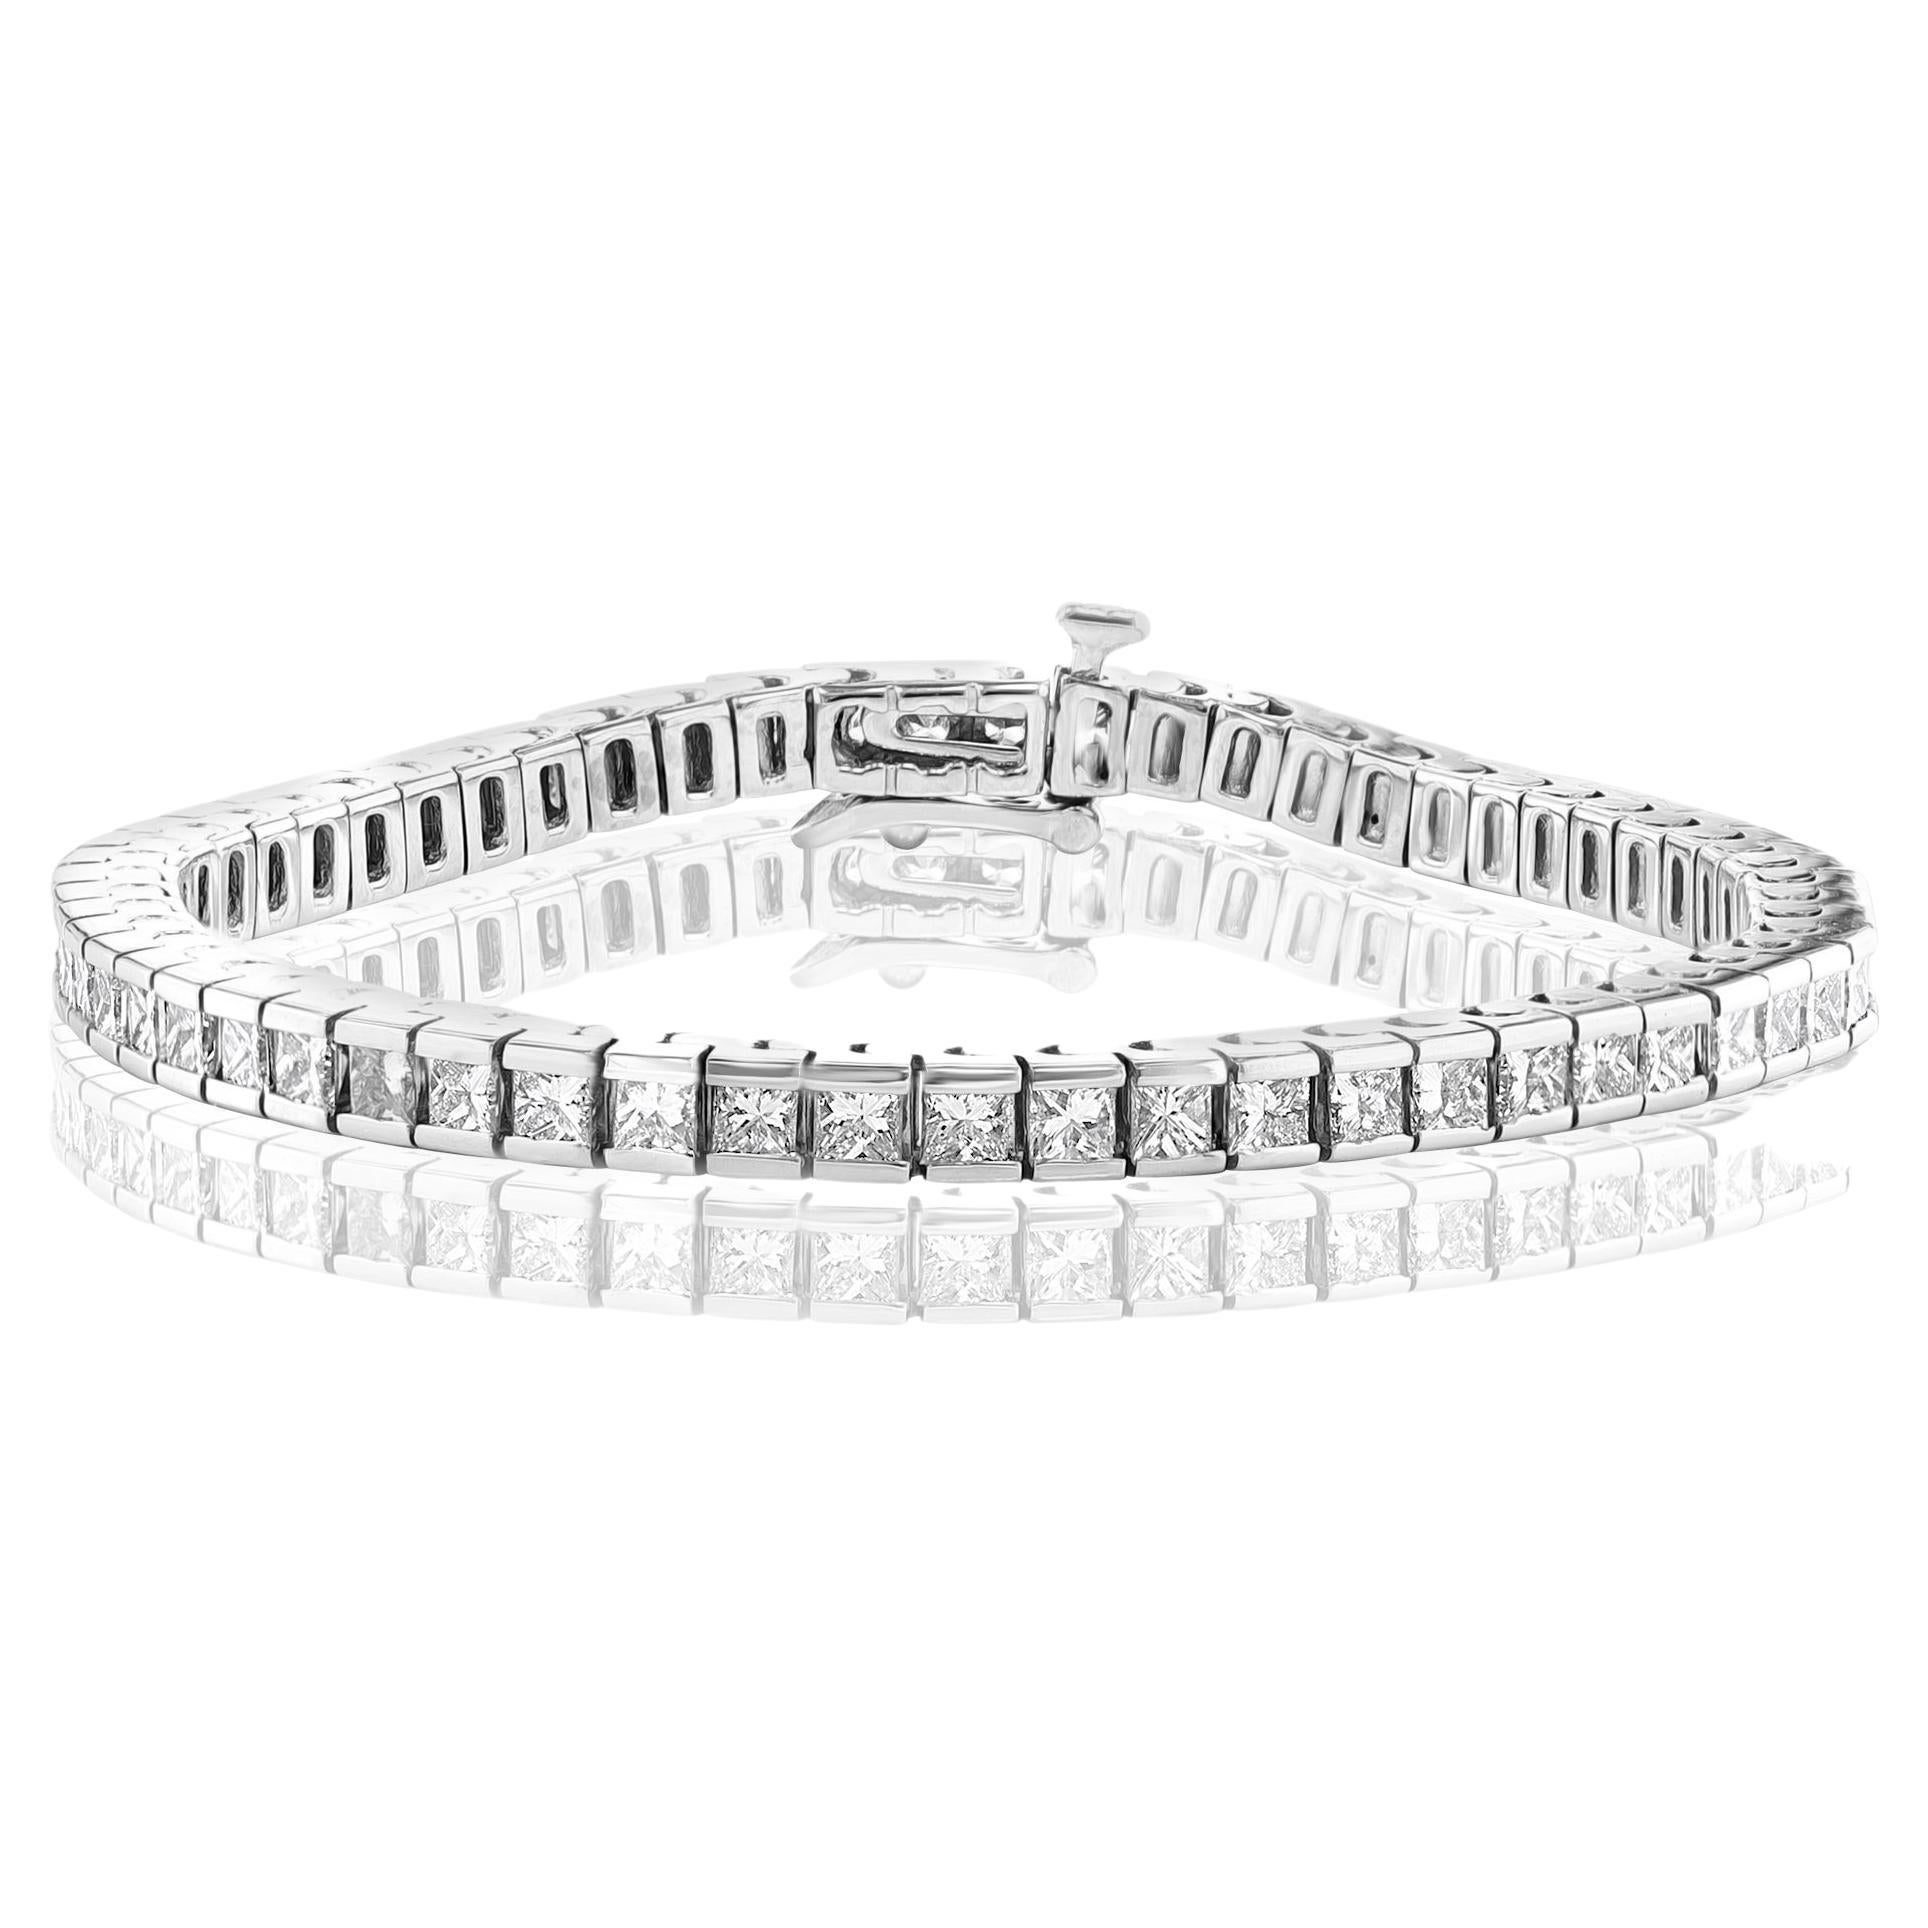 5.25 Carat Princess Cut Diamond Tennis Bracelet in 14K White Gold For Sale